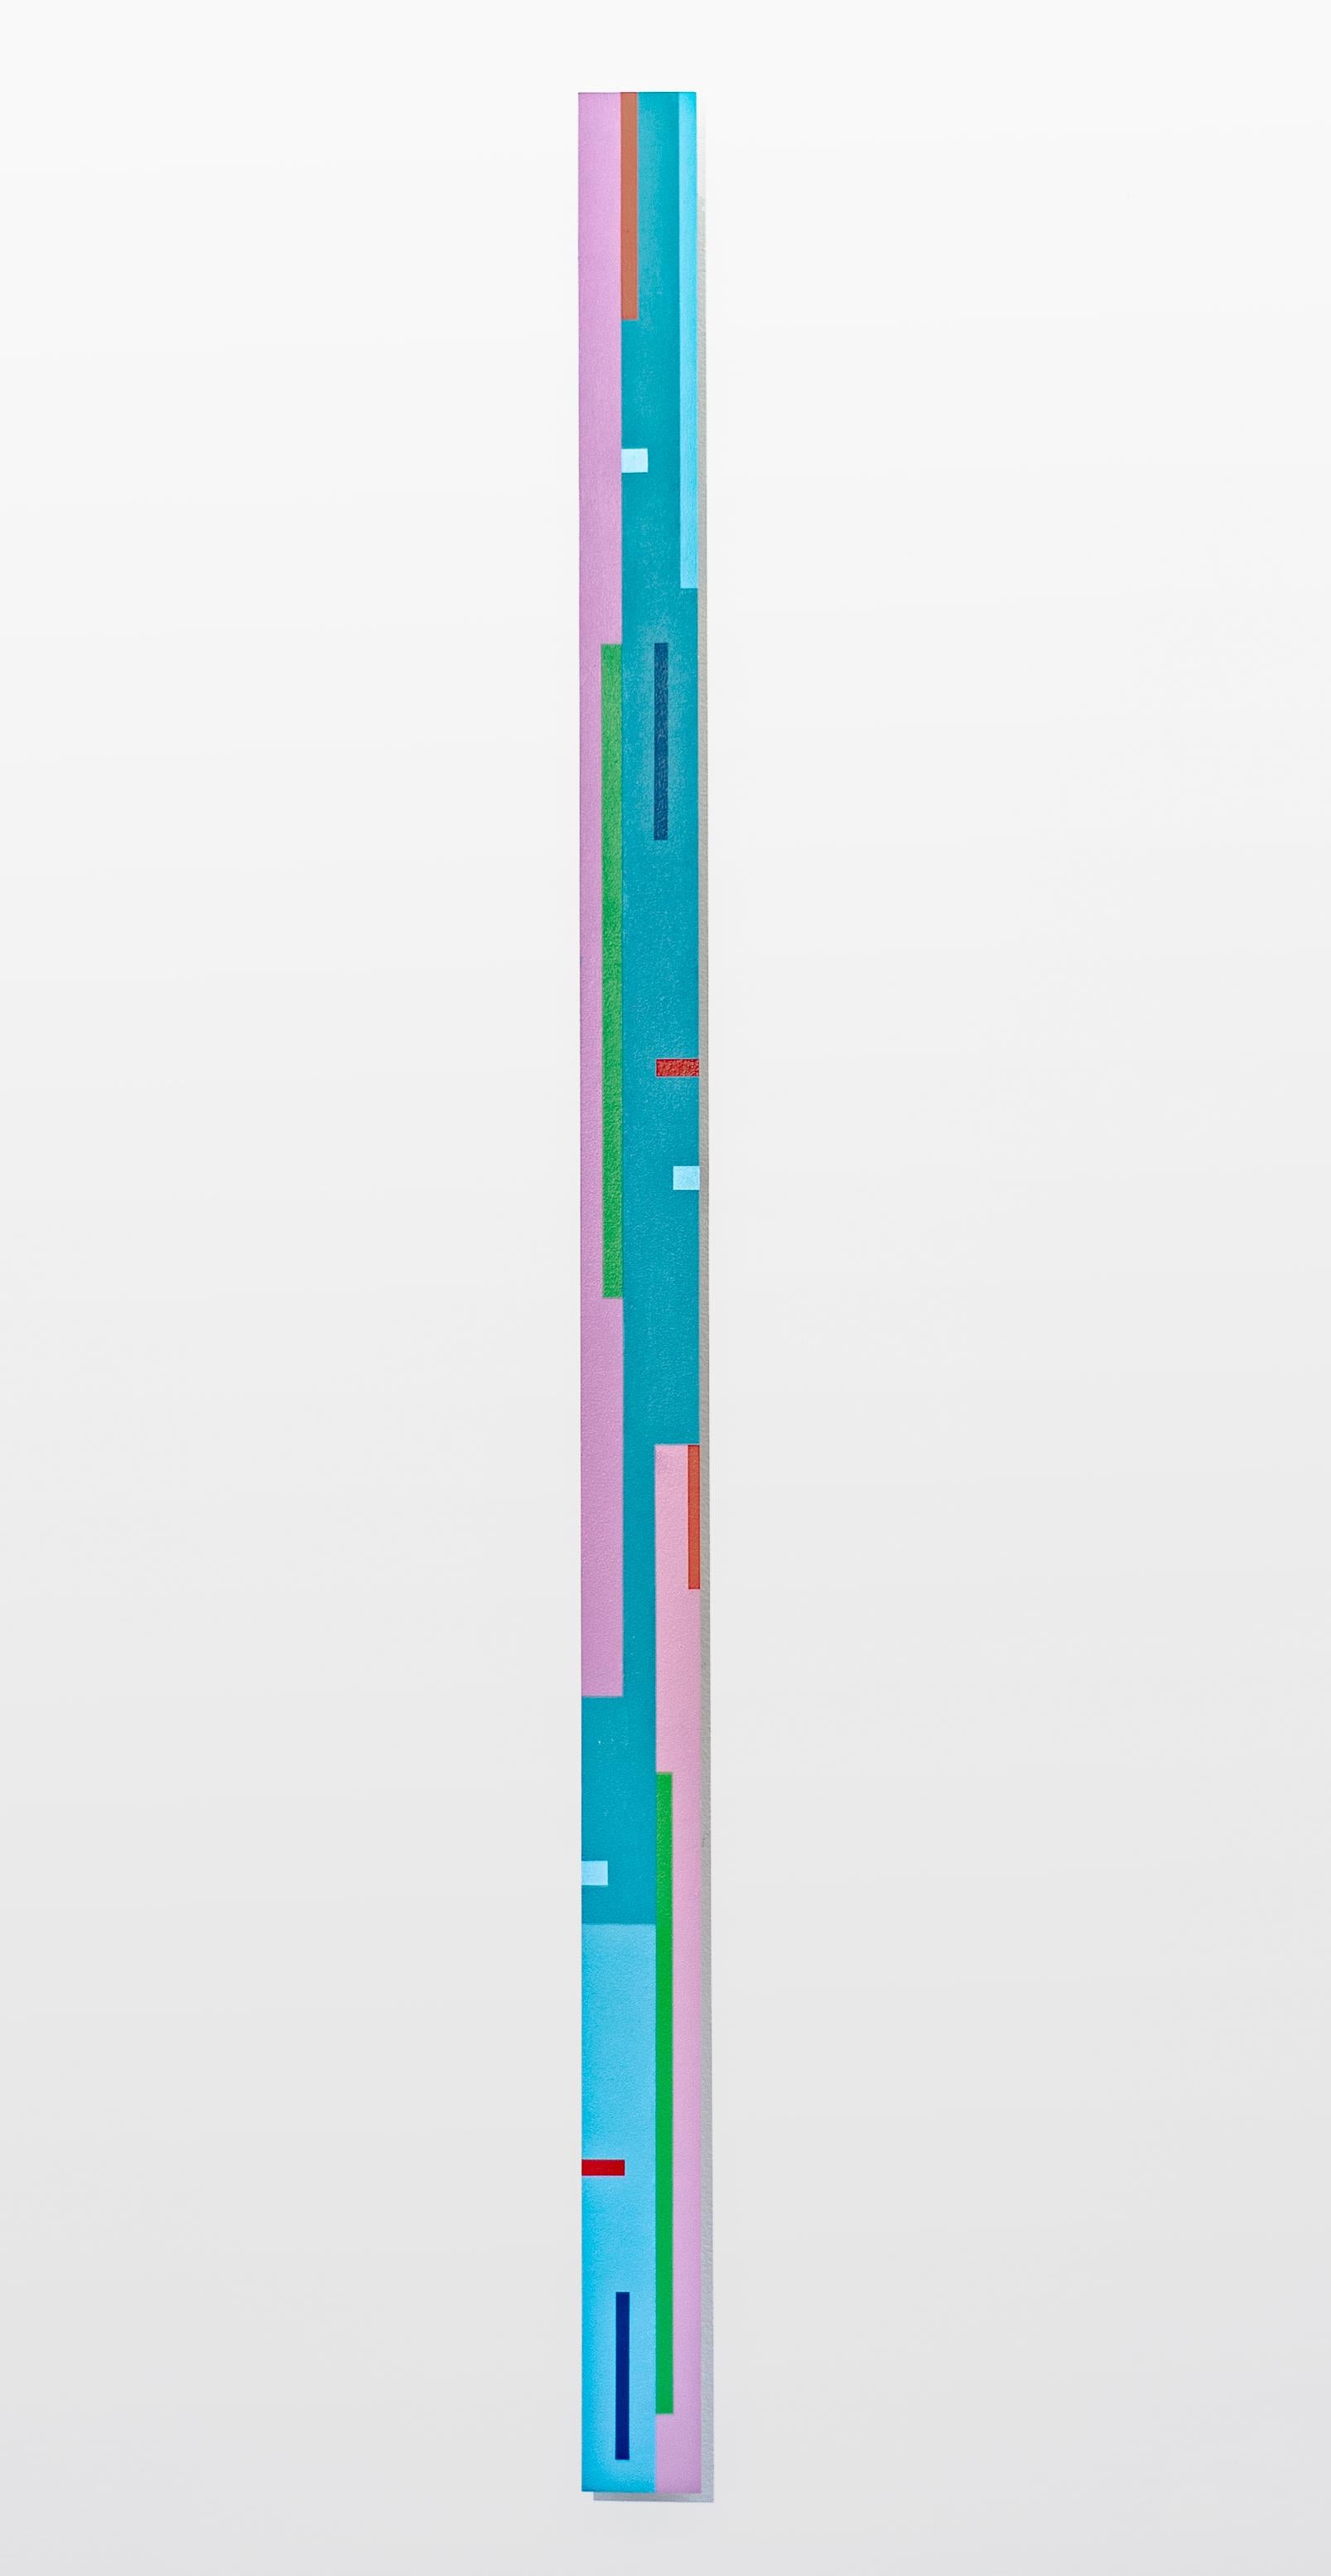 TTH 10.3 - tall, narrow, playful geometric shapes, abstract acrylic on aluminum